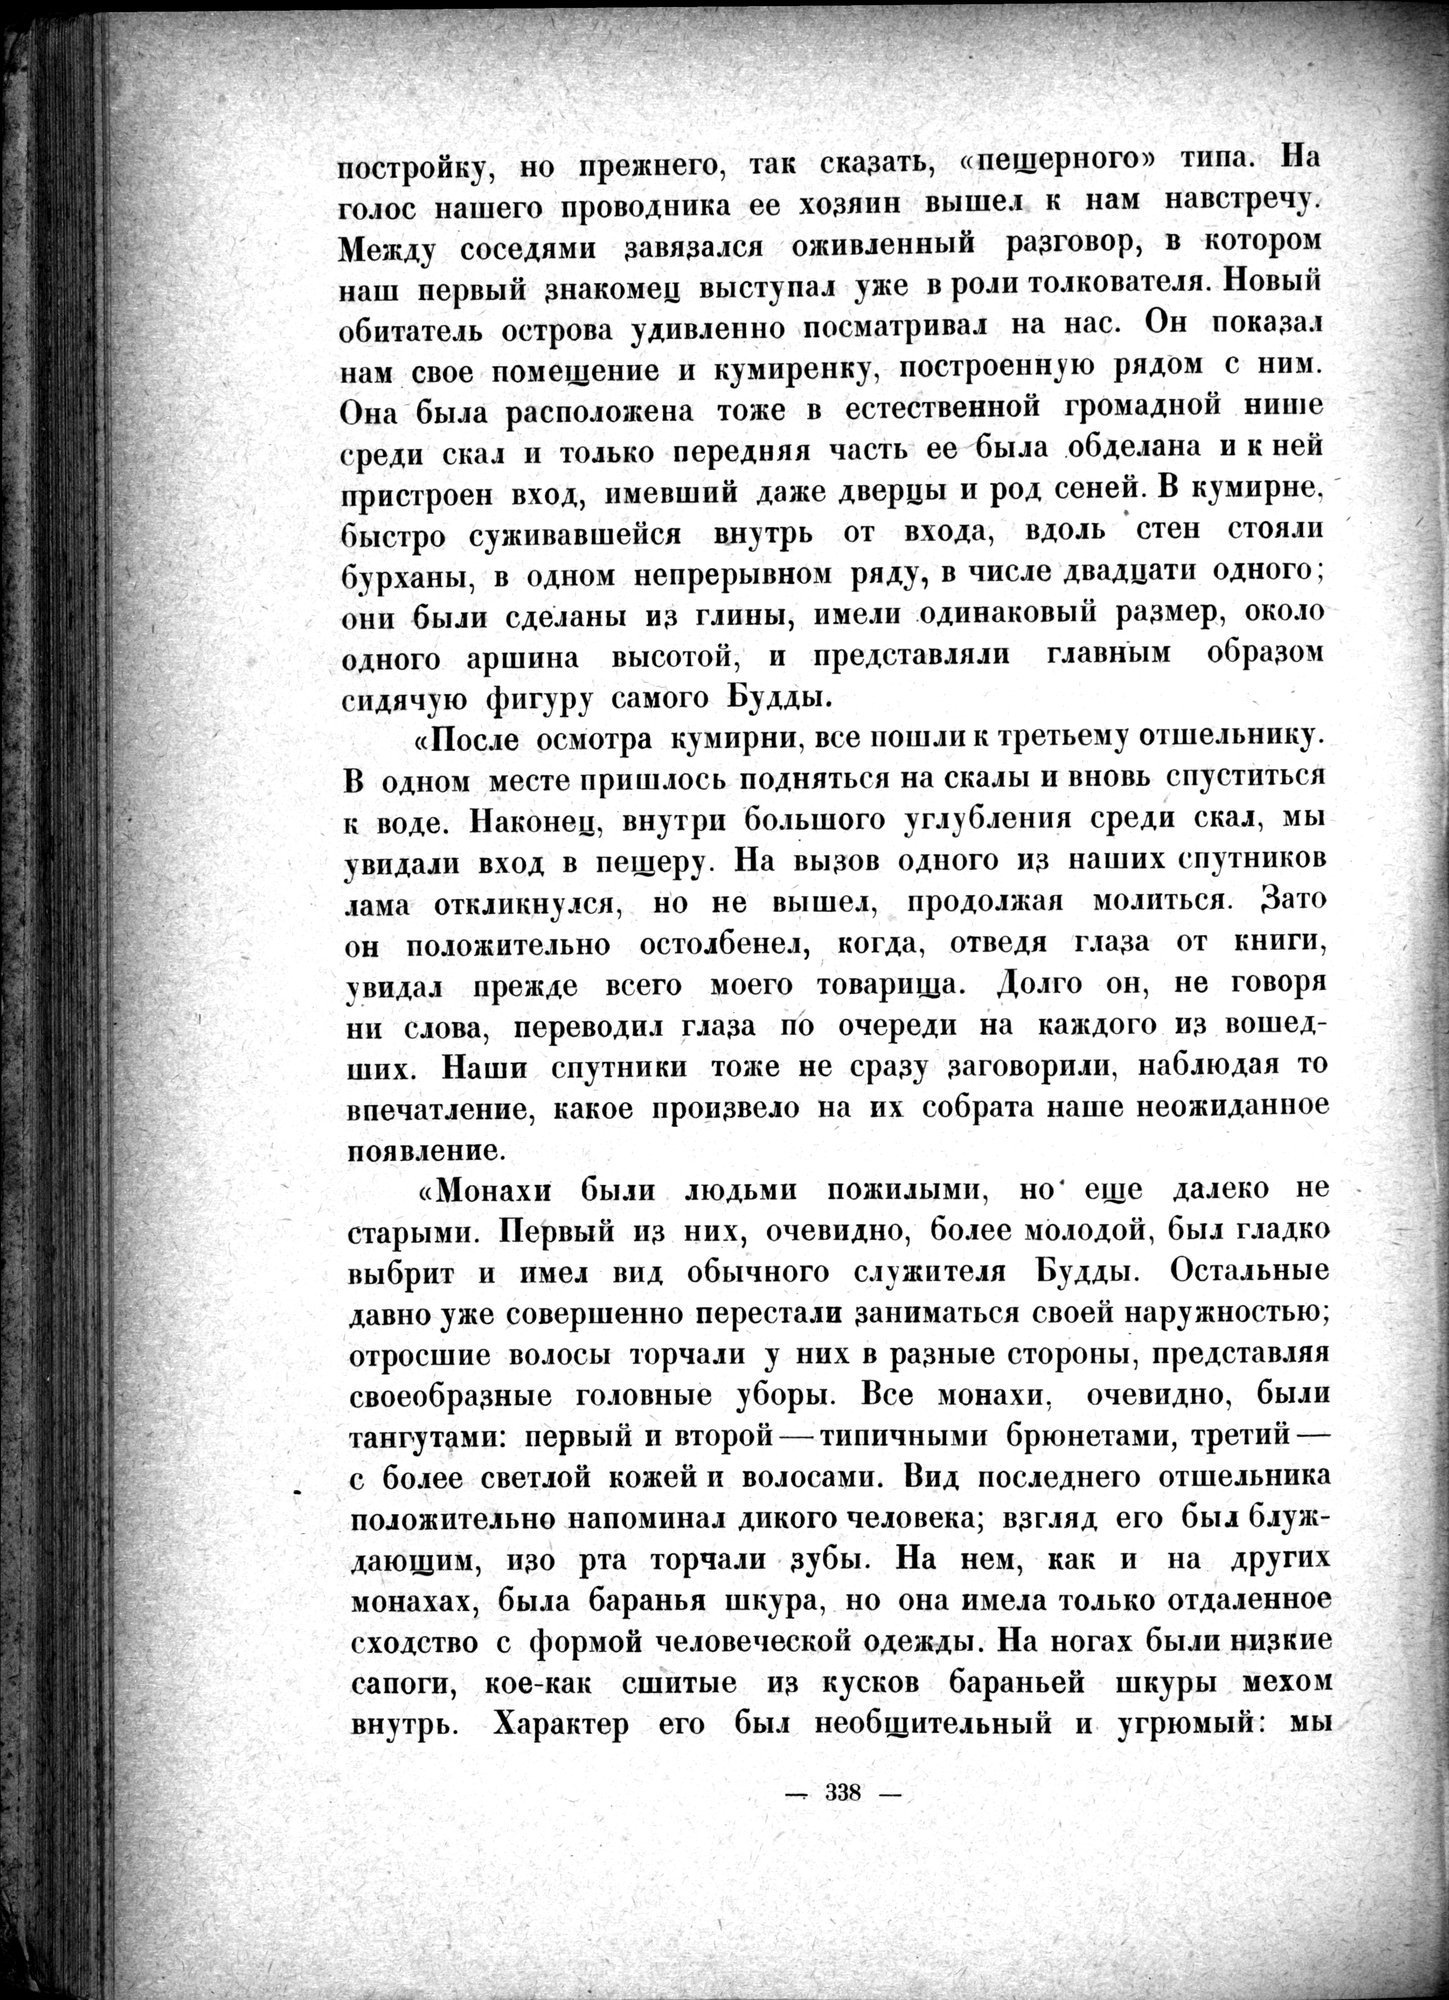 Mongoliya i Amdo i mertby gorod Khara-Khoto : vol.1 / Page 388 (Grayscale High Resolution Image)